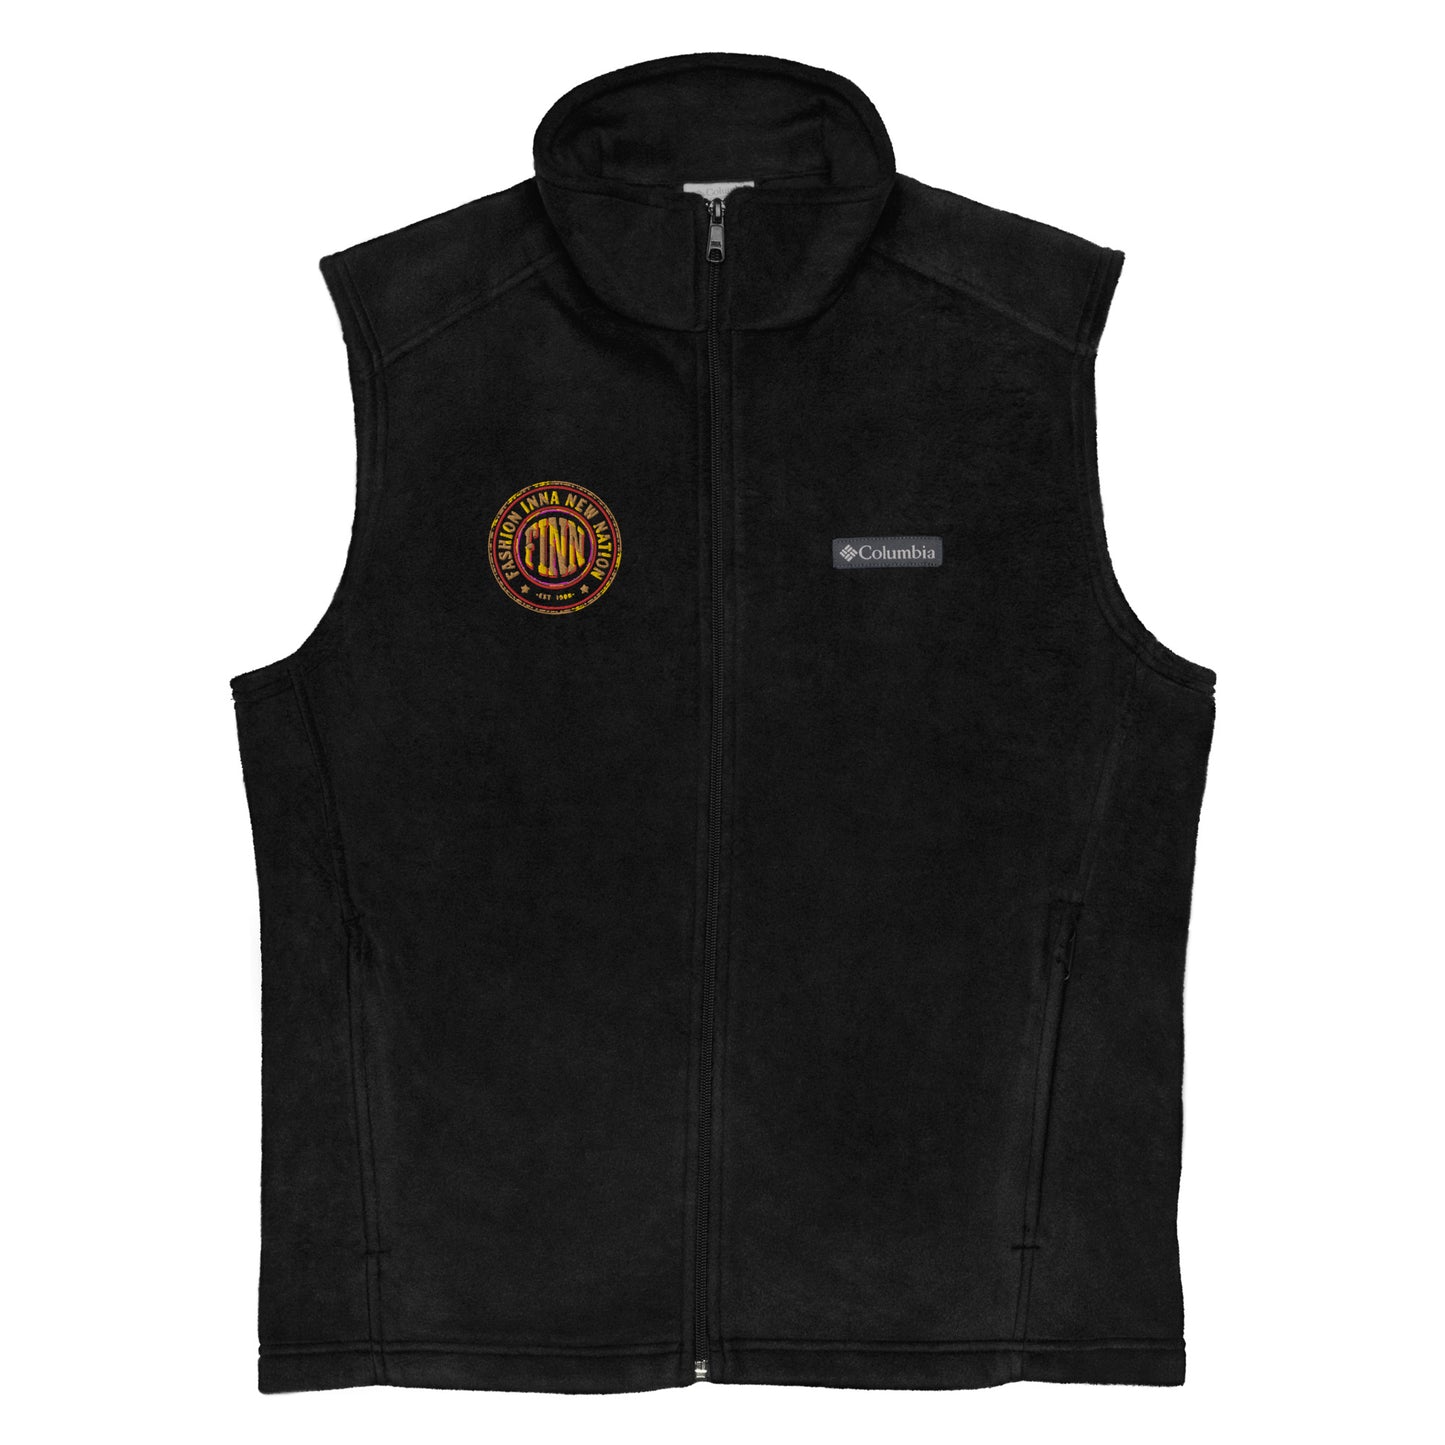 FINN Columbia fleece vest